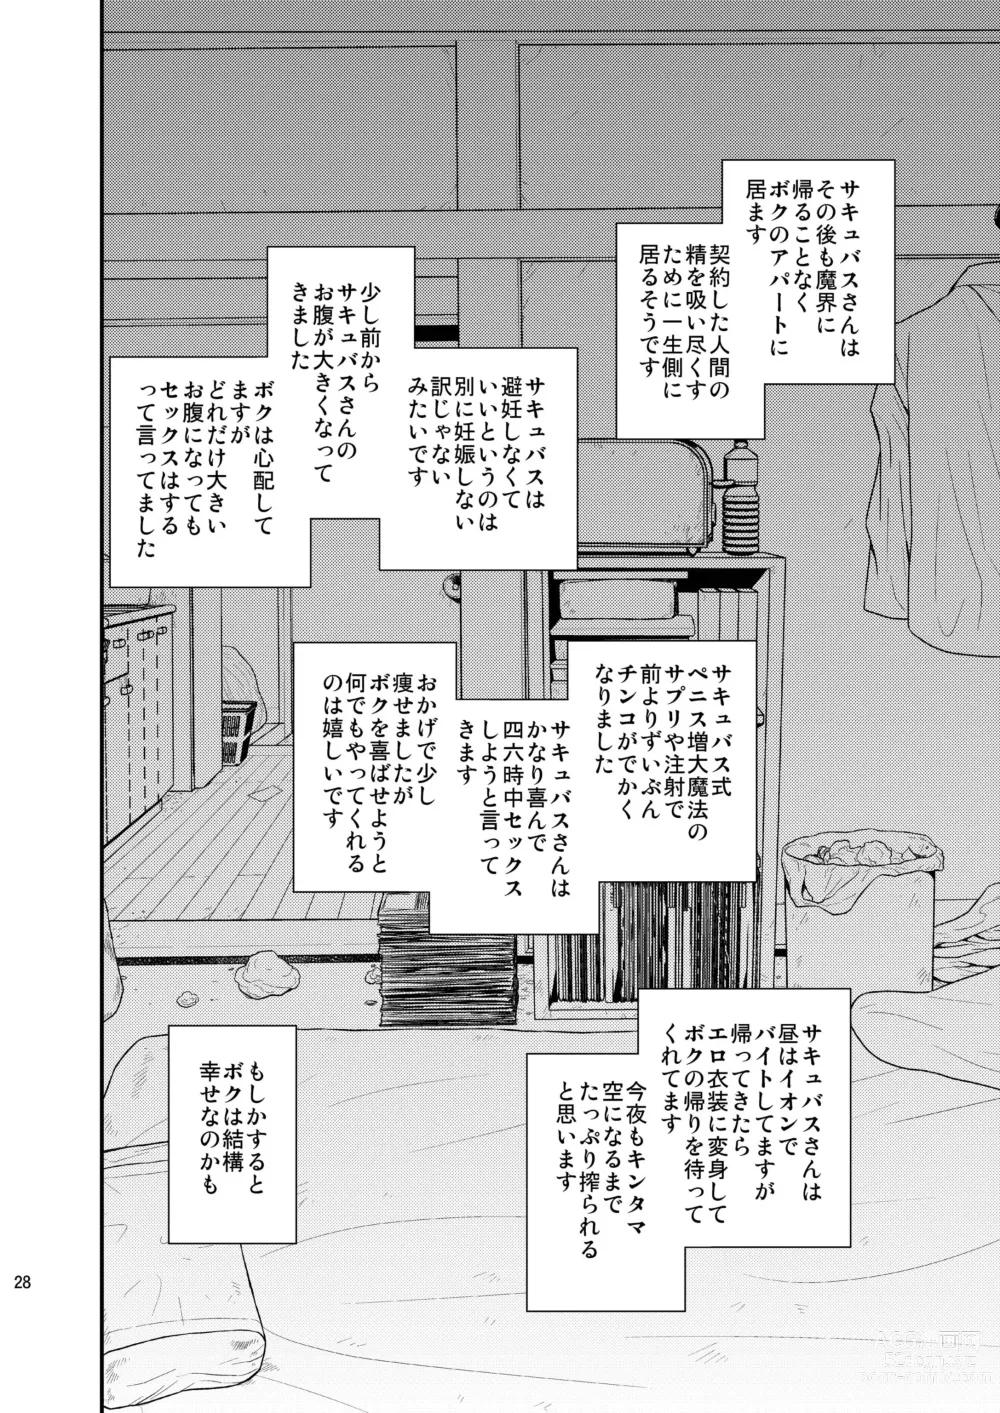 Page 27 of doujinshi Succubus